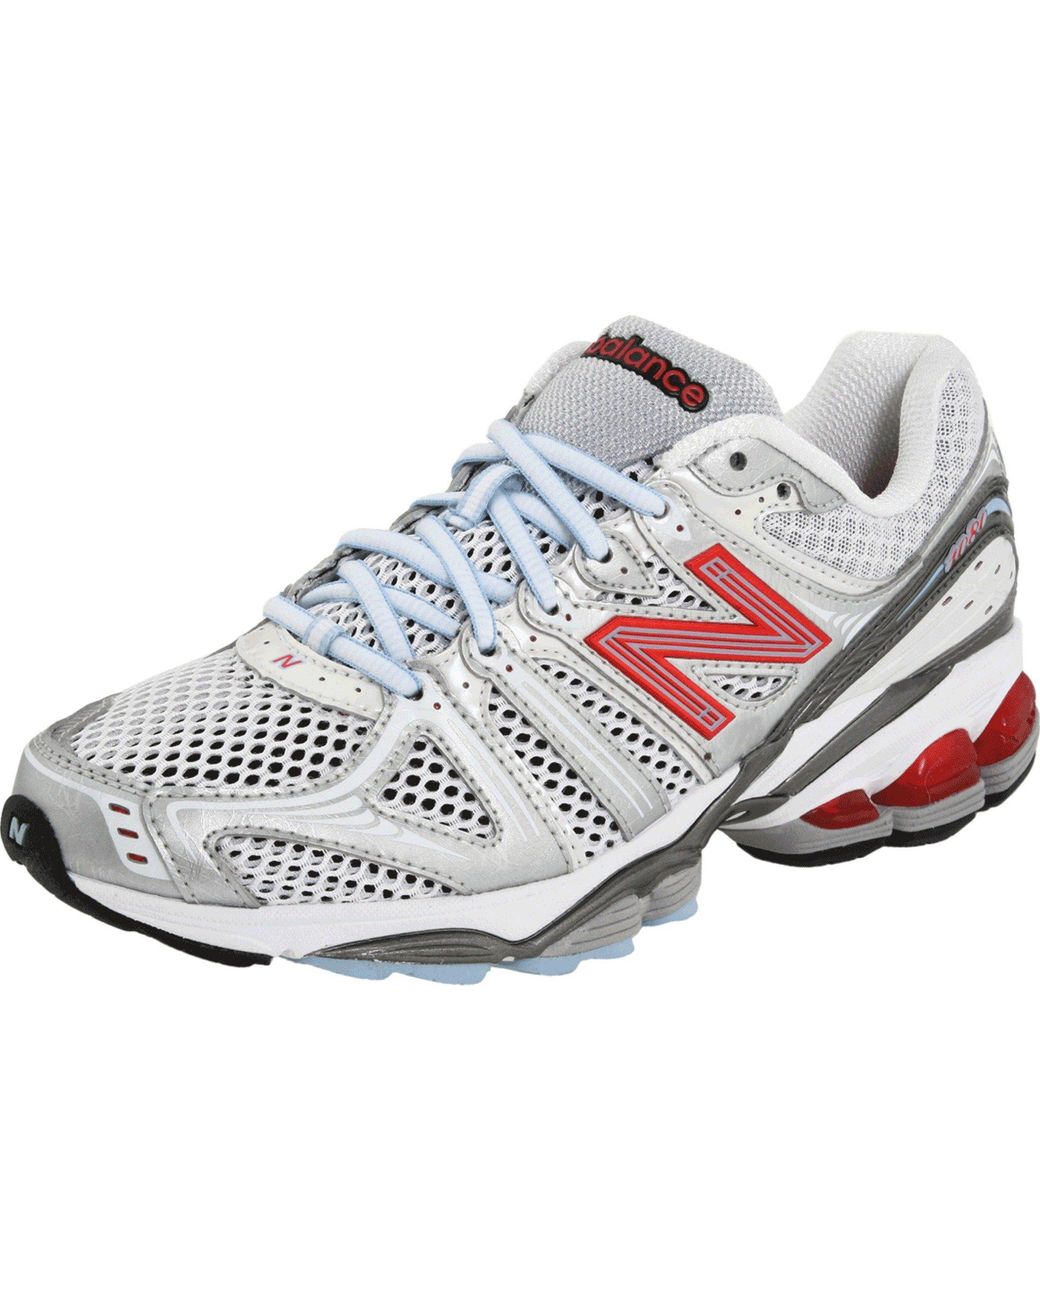 New Balance 1080 V1 Cross Country Running Shoe in Metallic | Lyst